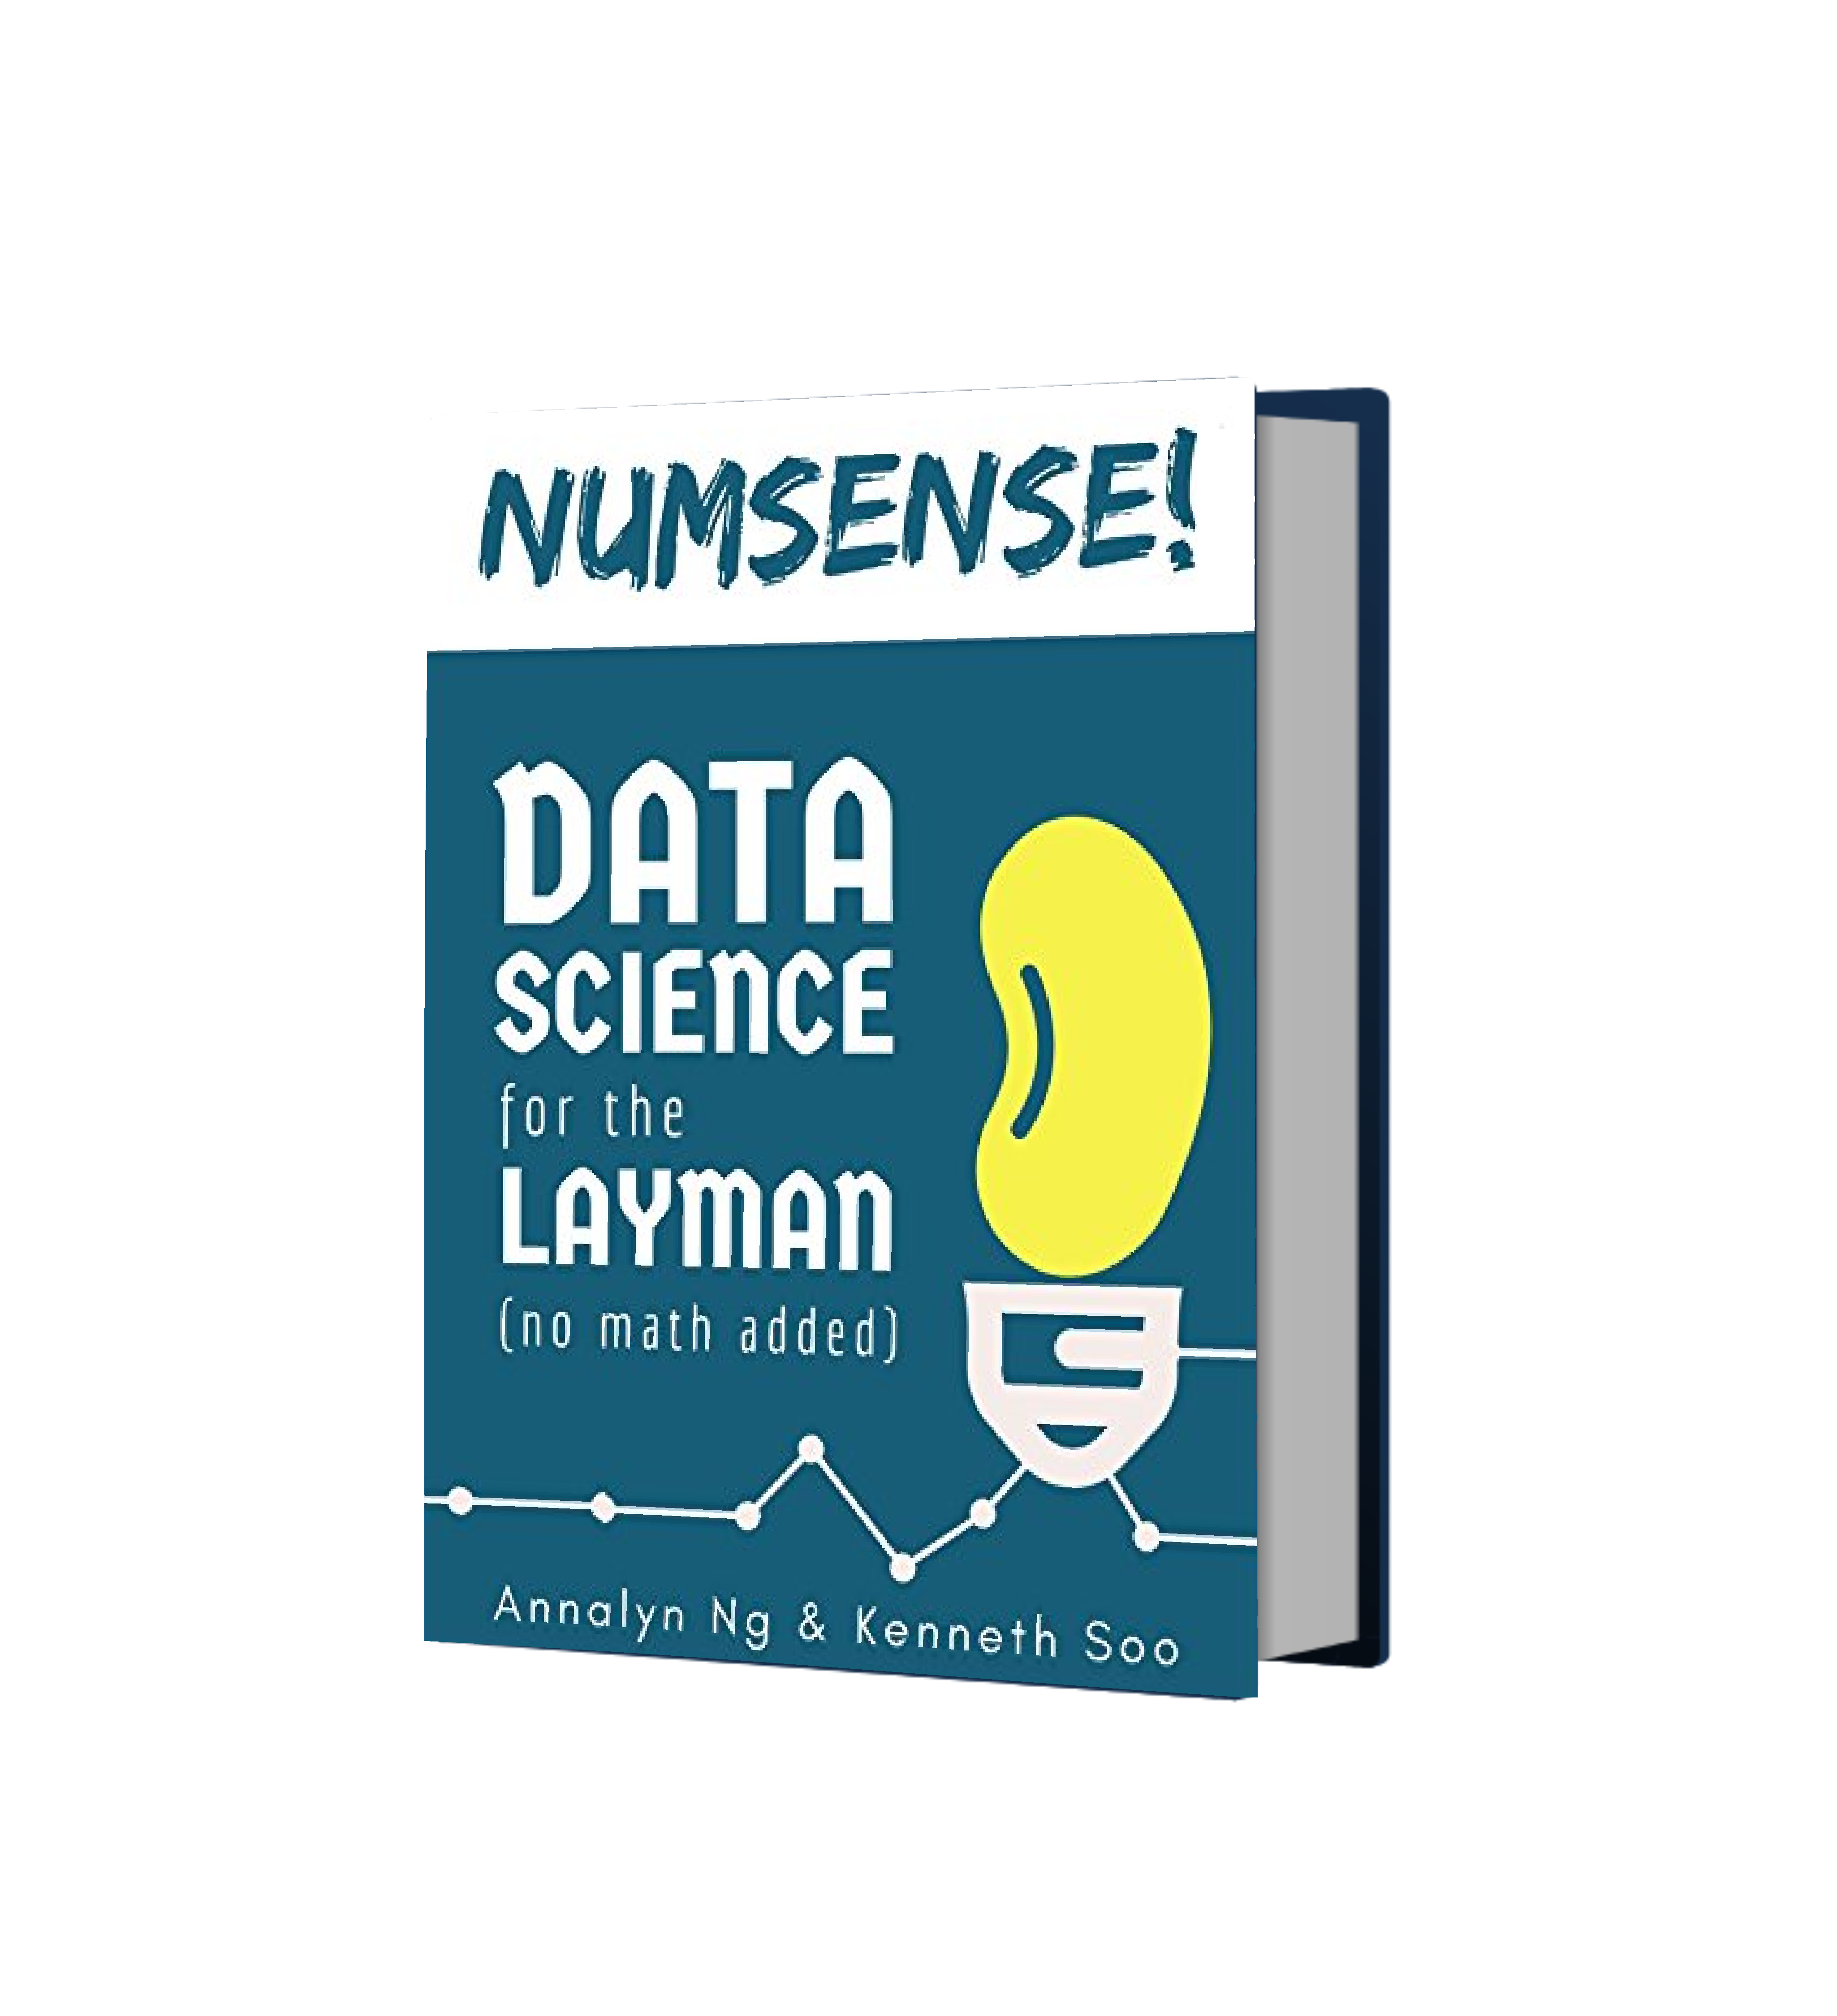 دانلود کتاب Numsense! Data Science for the Layman